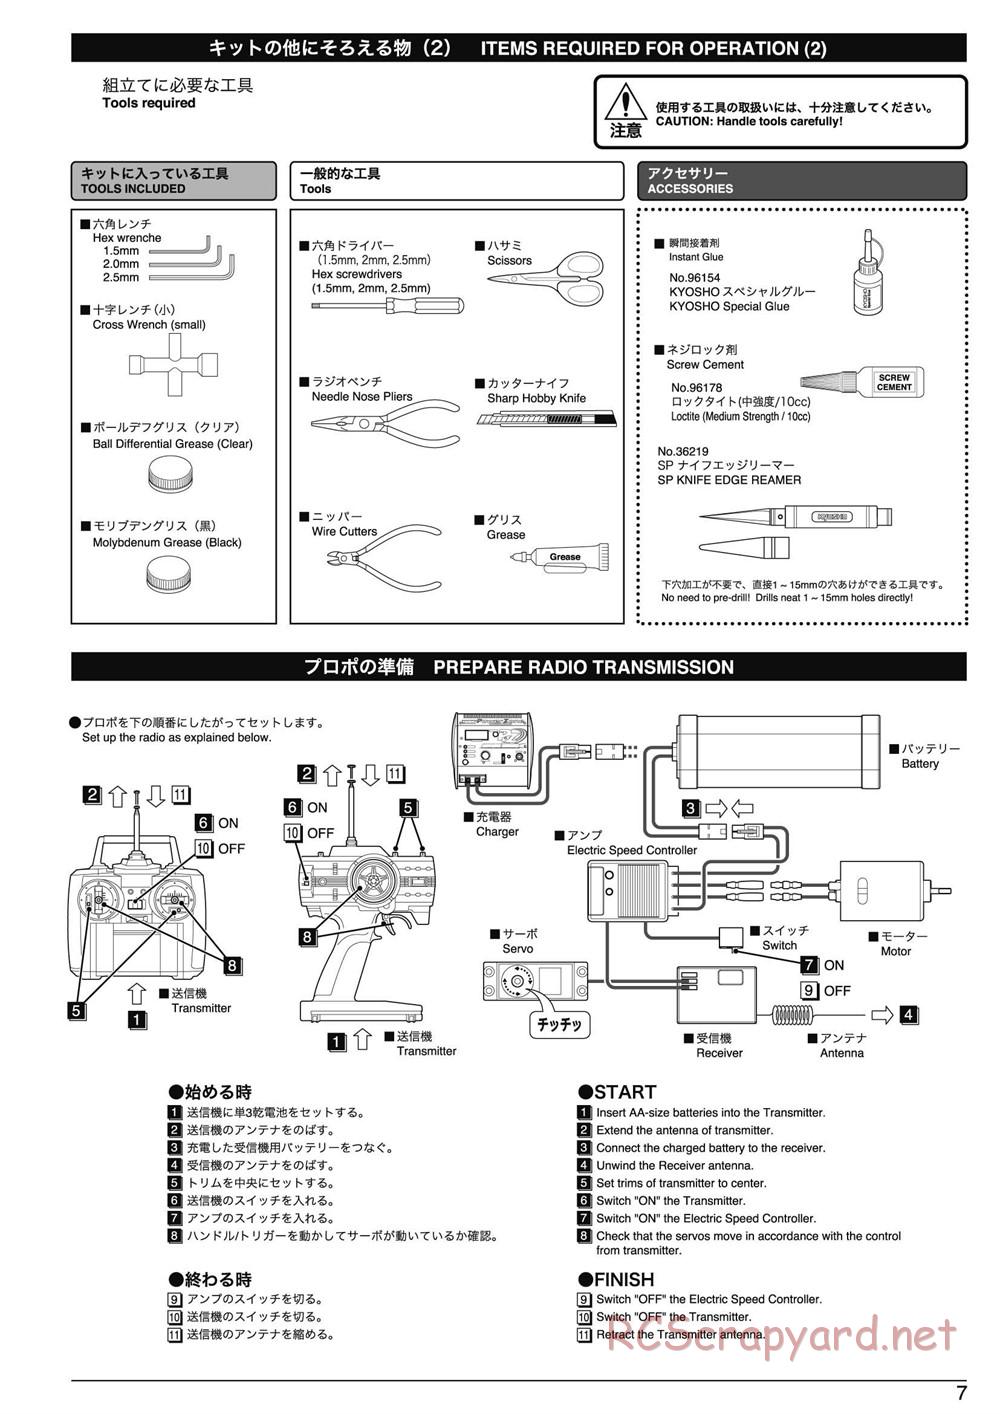 Kyosho - Lazer ZX-5 FS2 SP - Manual - Page 7